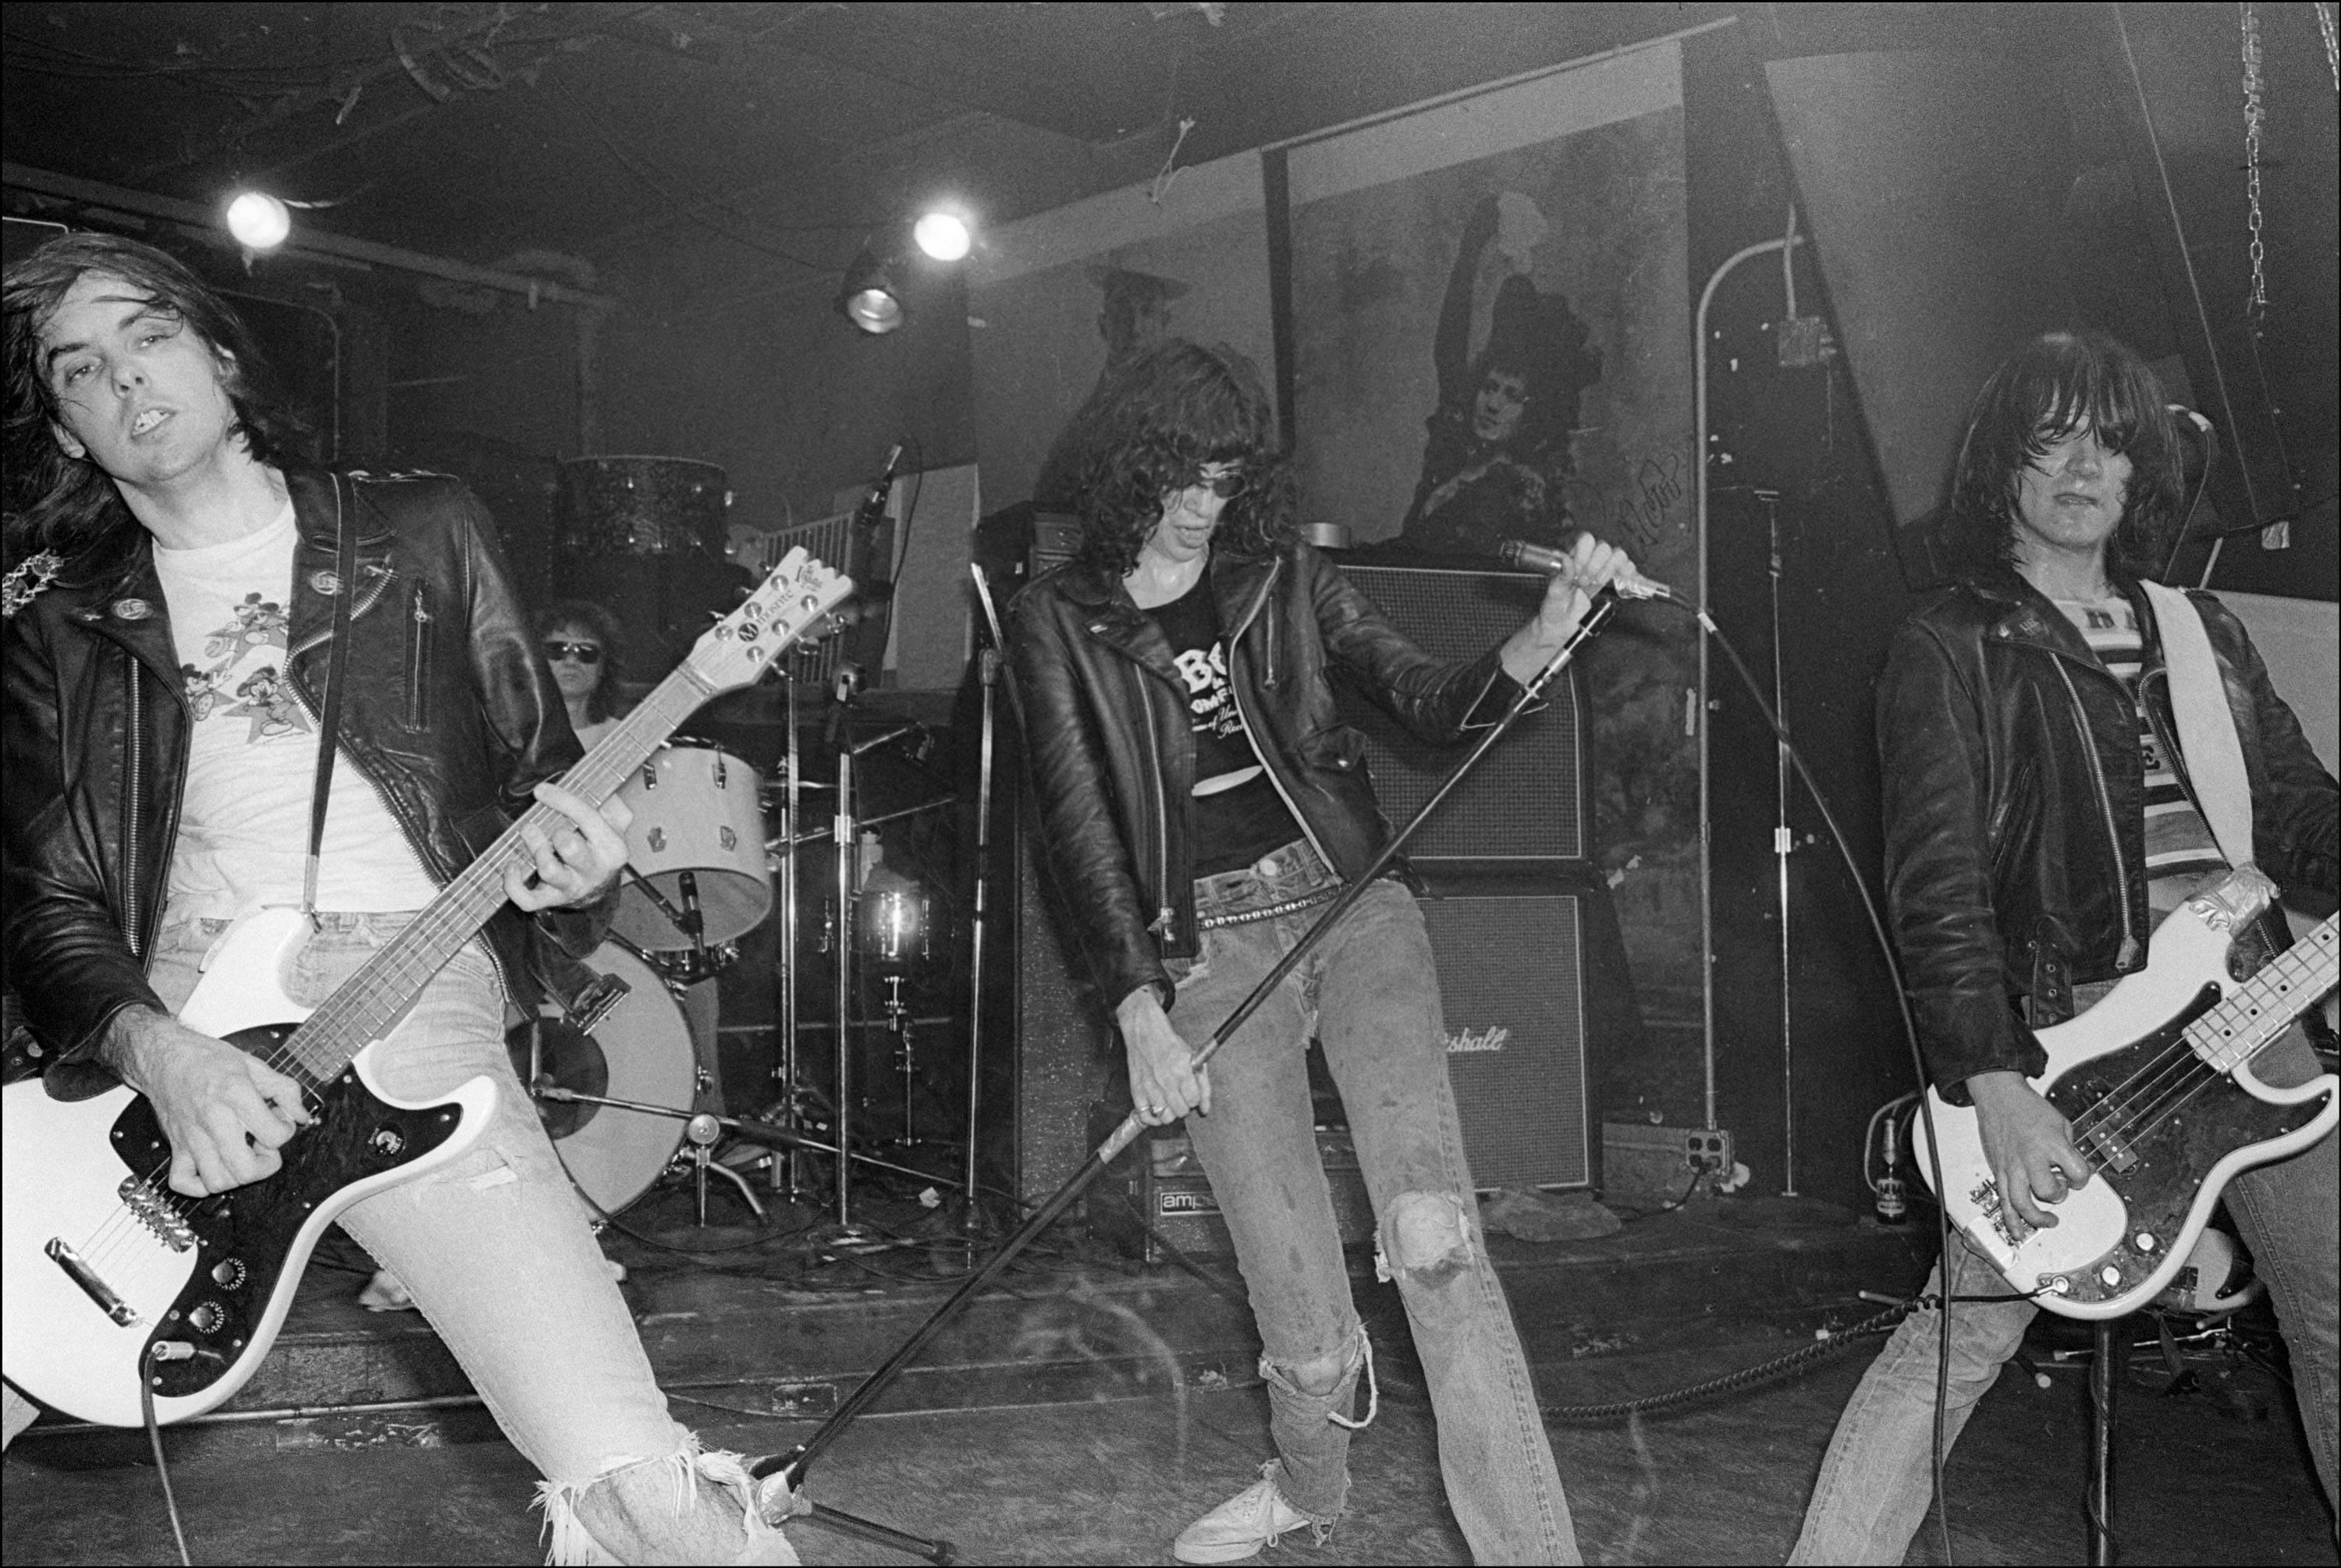 Allan Tannenbaum Black and White Photograph - The Ramones perform at CBGB, 1977